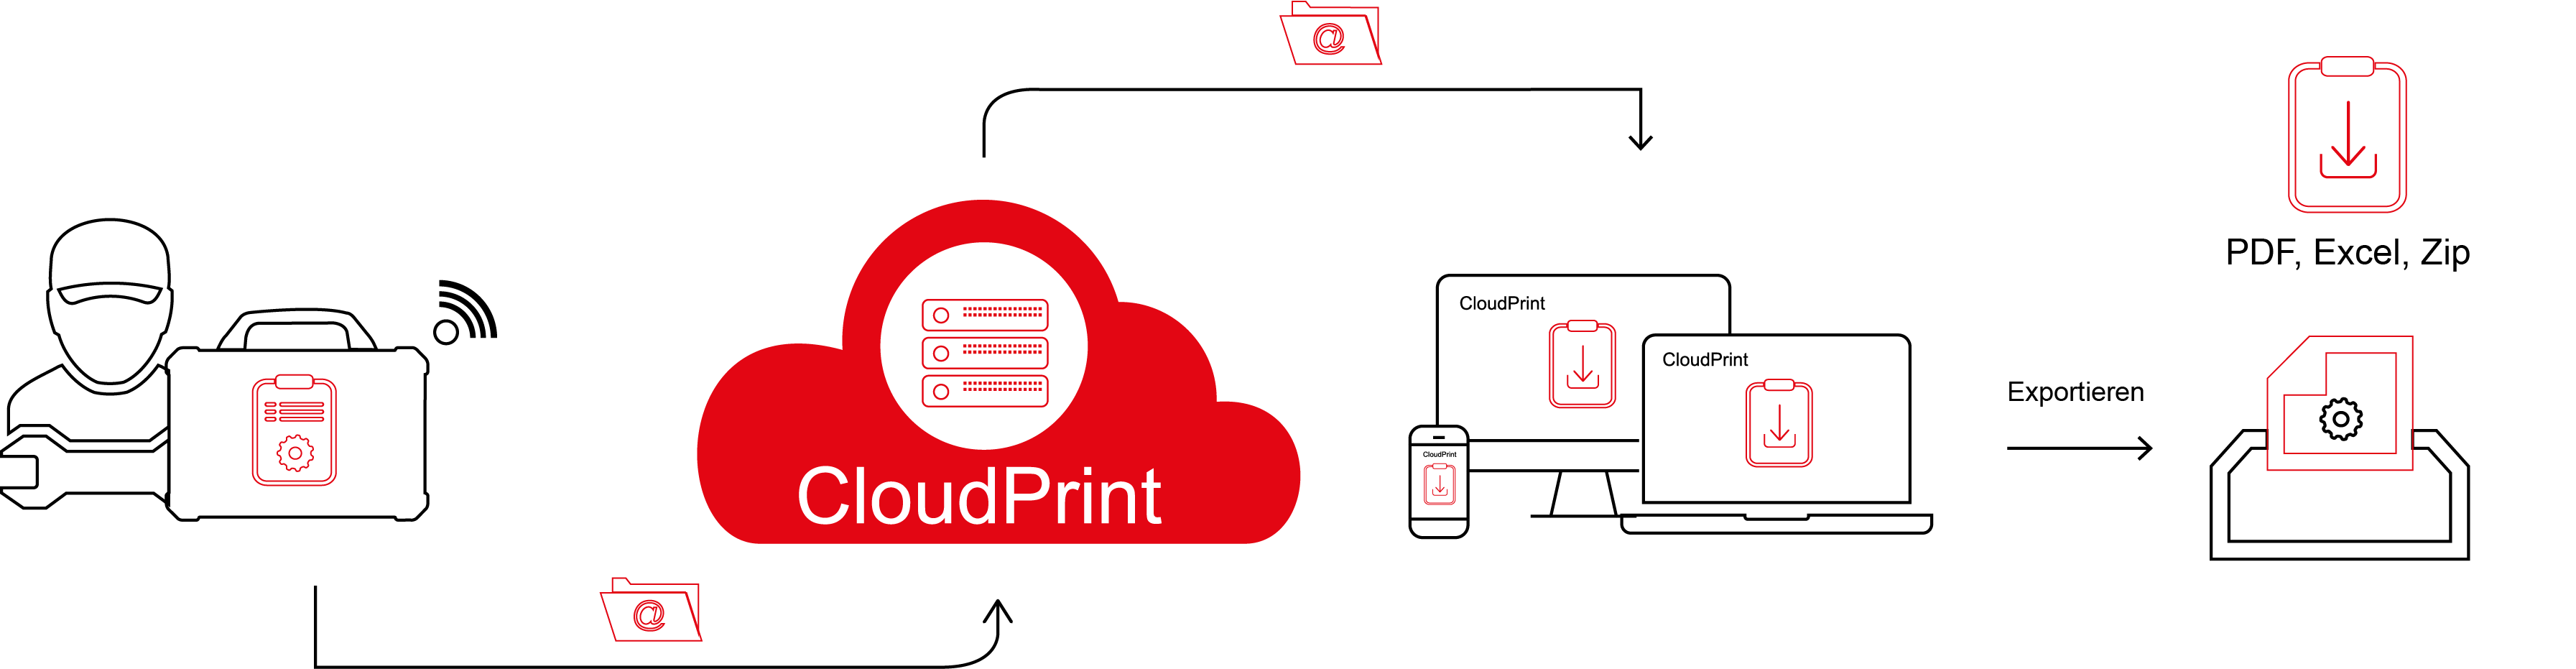 LAUNCH-Europe-Cloud-Print-Platform-prozess